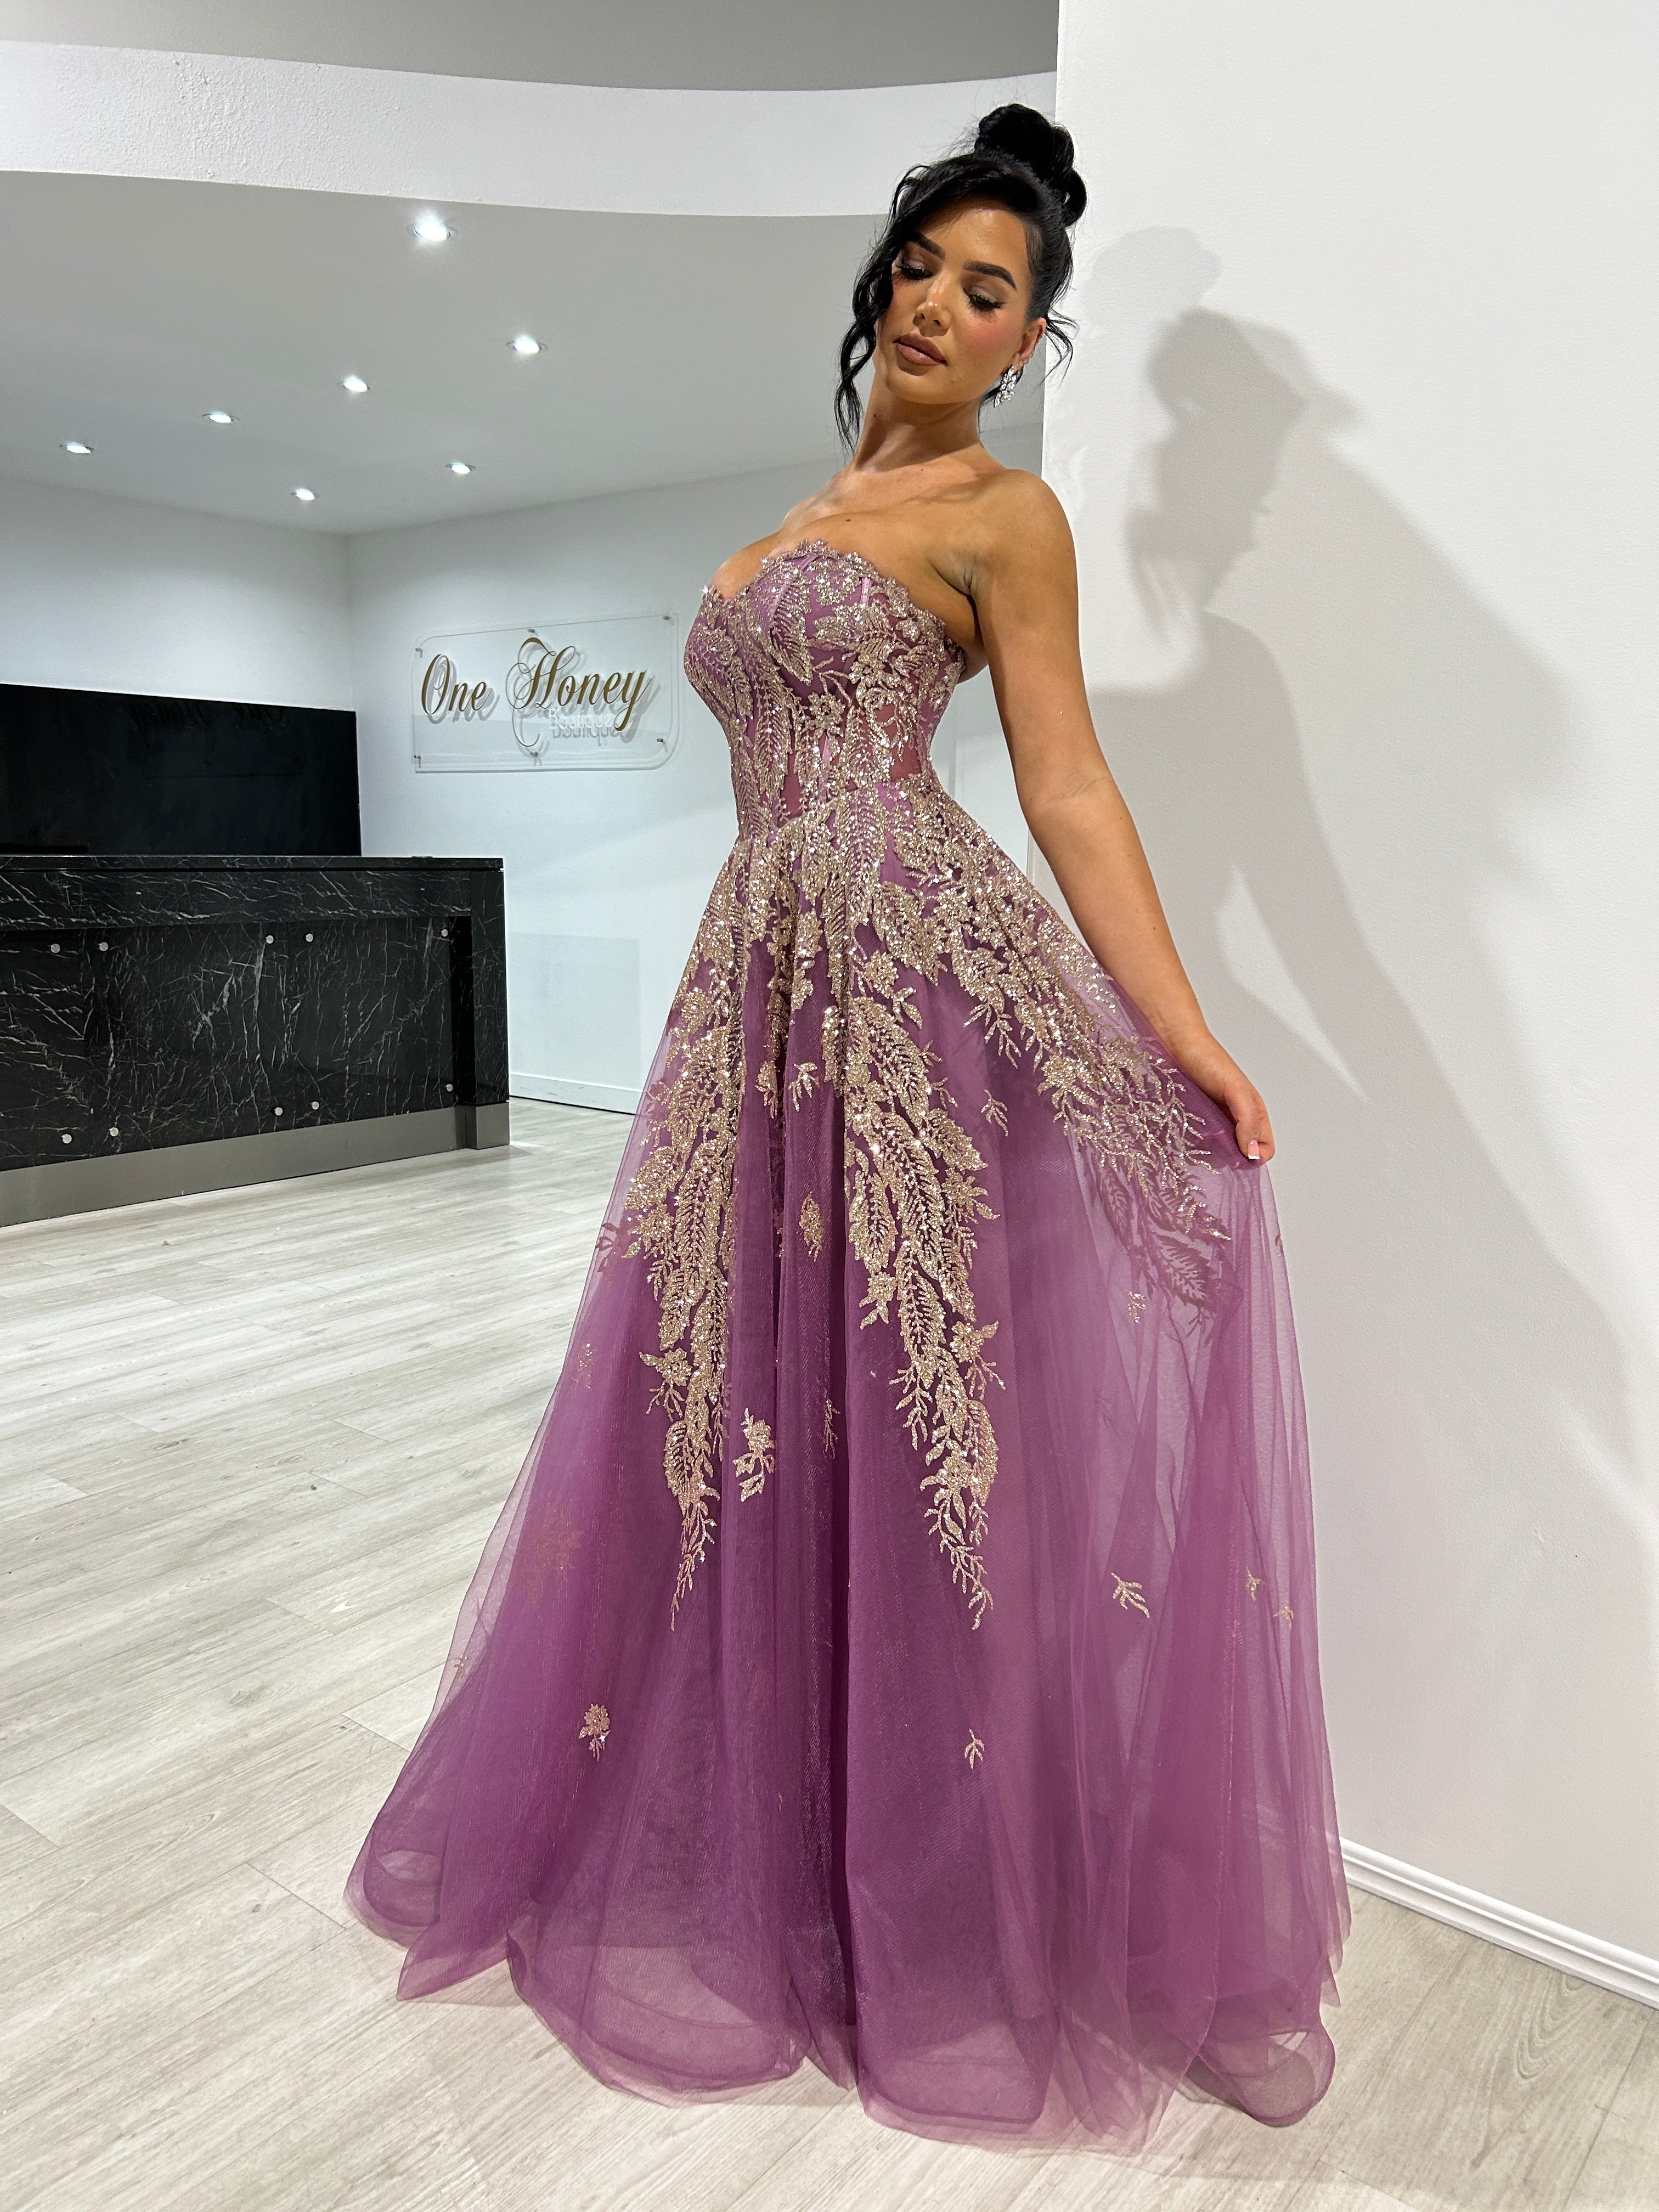 Honey Couture MERCER Gold Violet Strapless Glitter Ball Gown Formal Dress